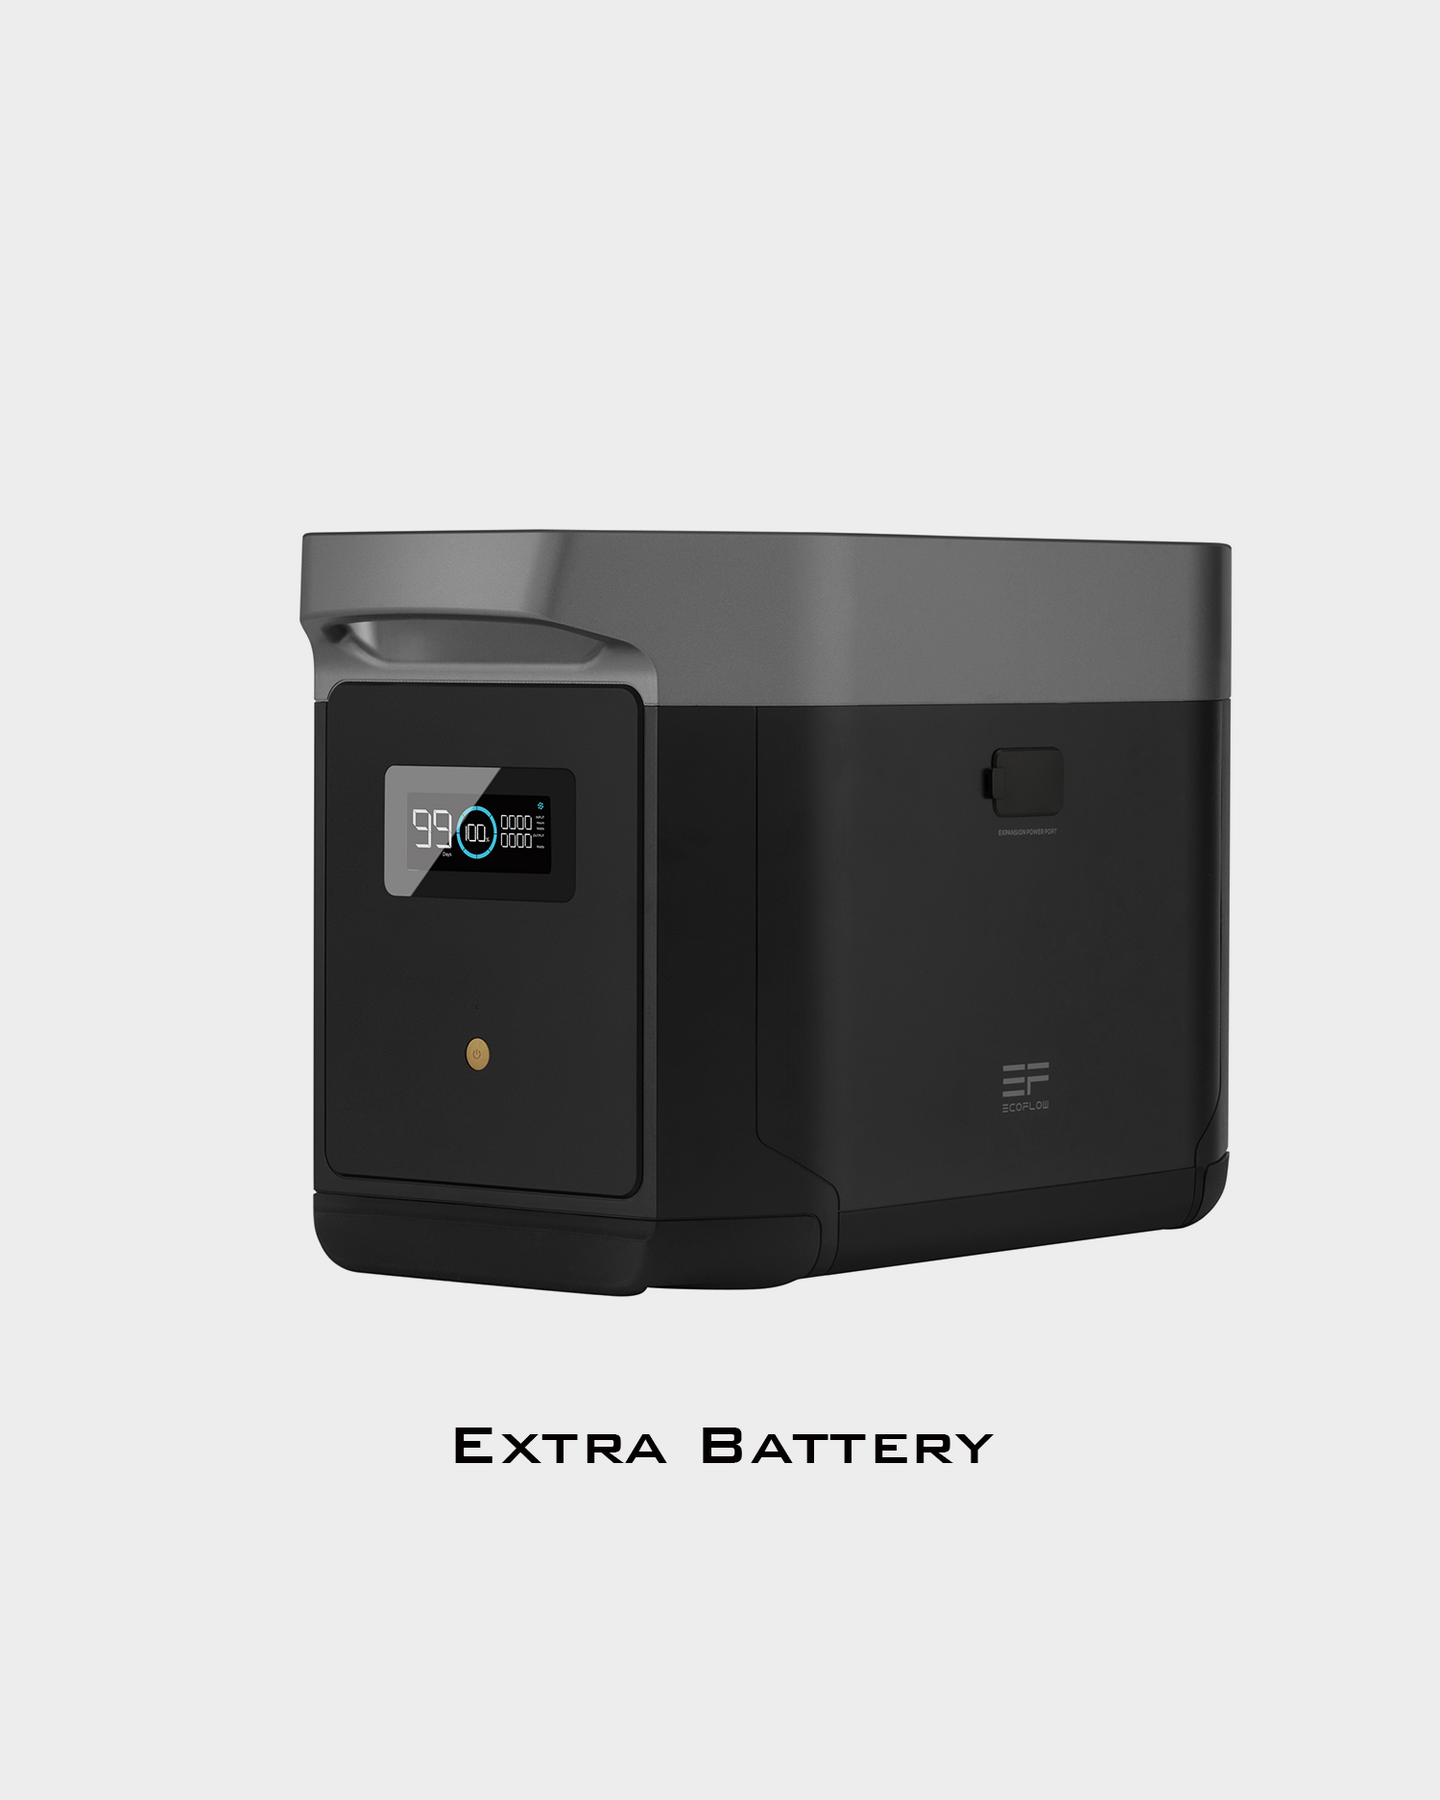 Ecoflow Delta Max Extra Battery